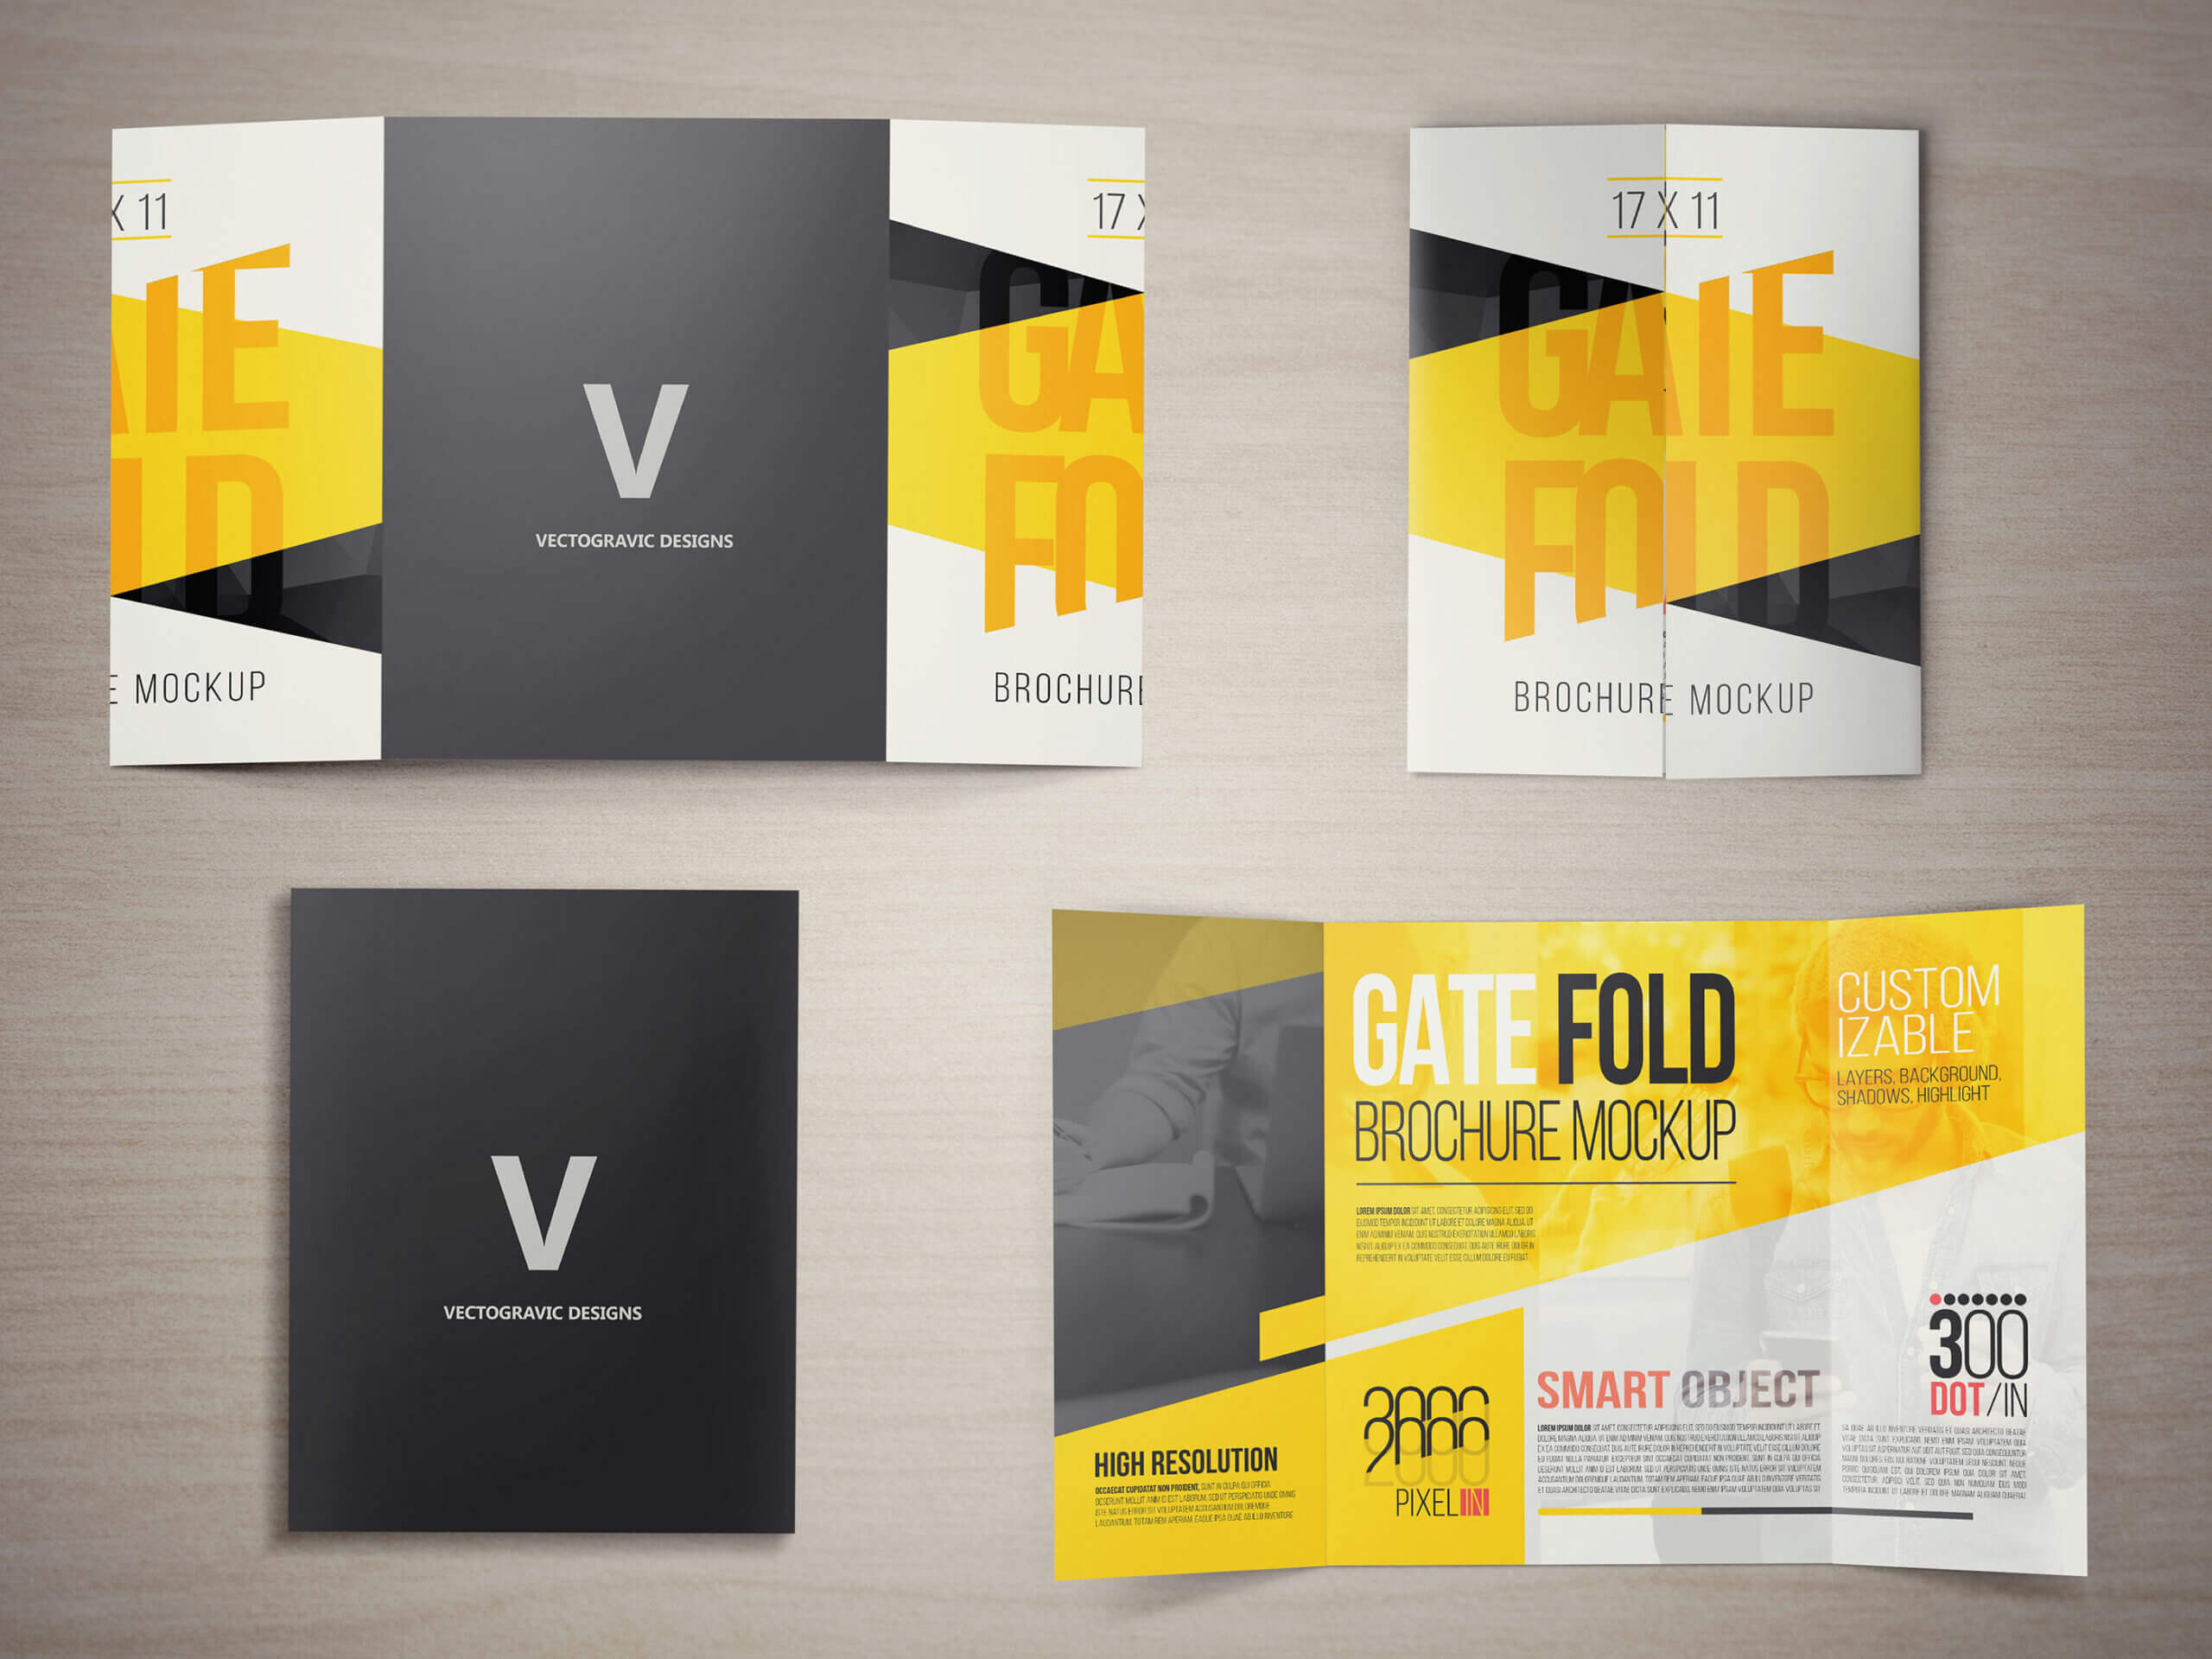 17 X 11 Gate Fold Brochure Mockup On Behance Intended For Gate Fold Brochure Template